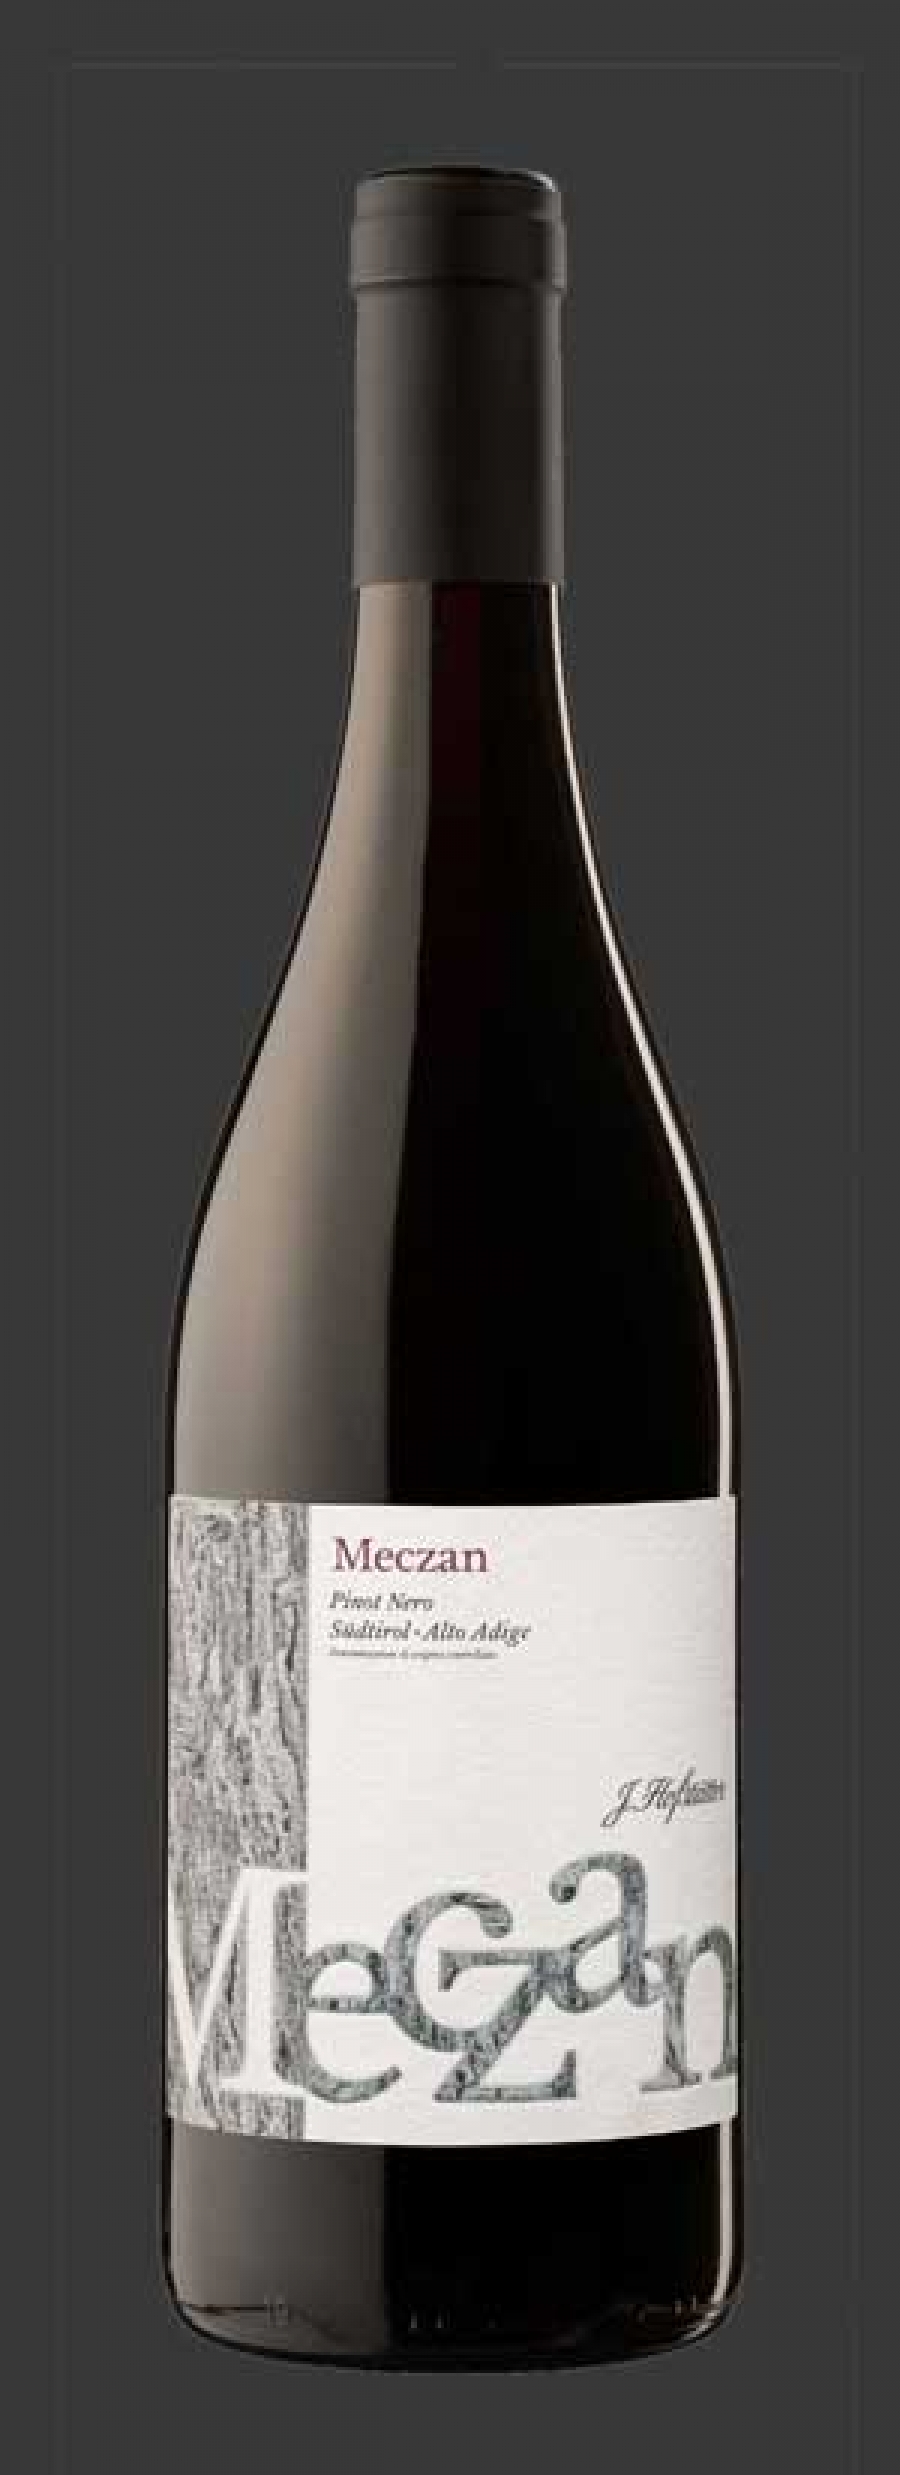 2013 J. Hofstatter Meczan Pinot Nero Alto Adige image